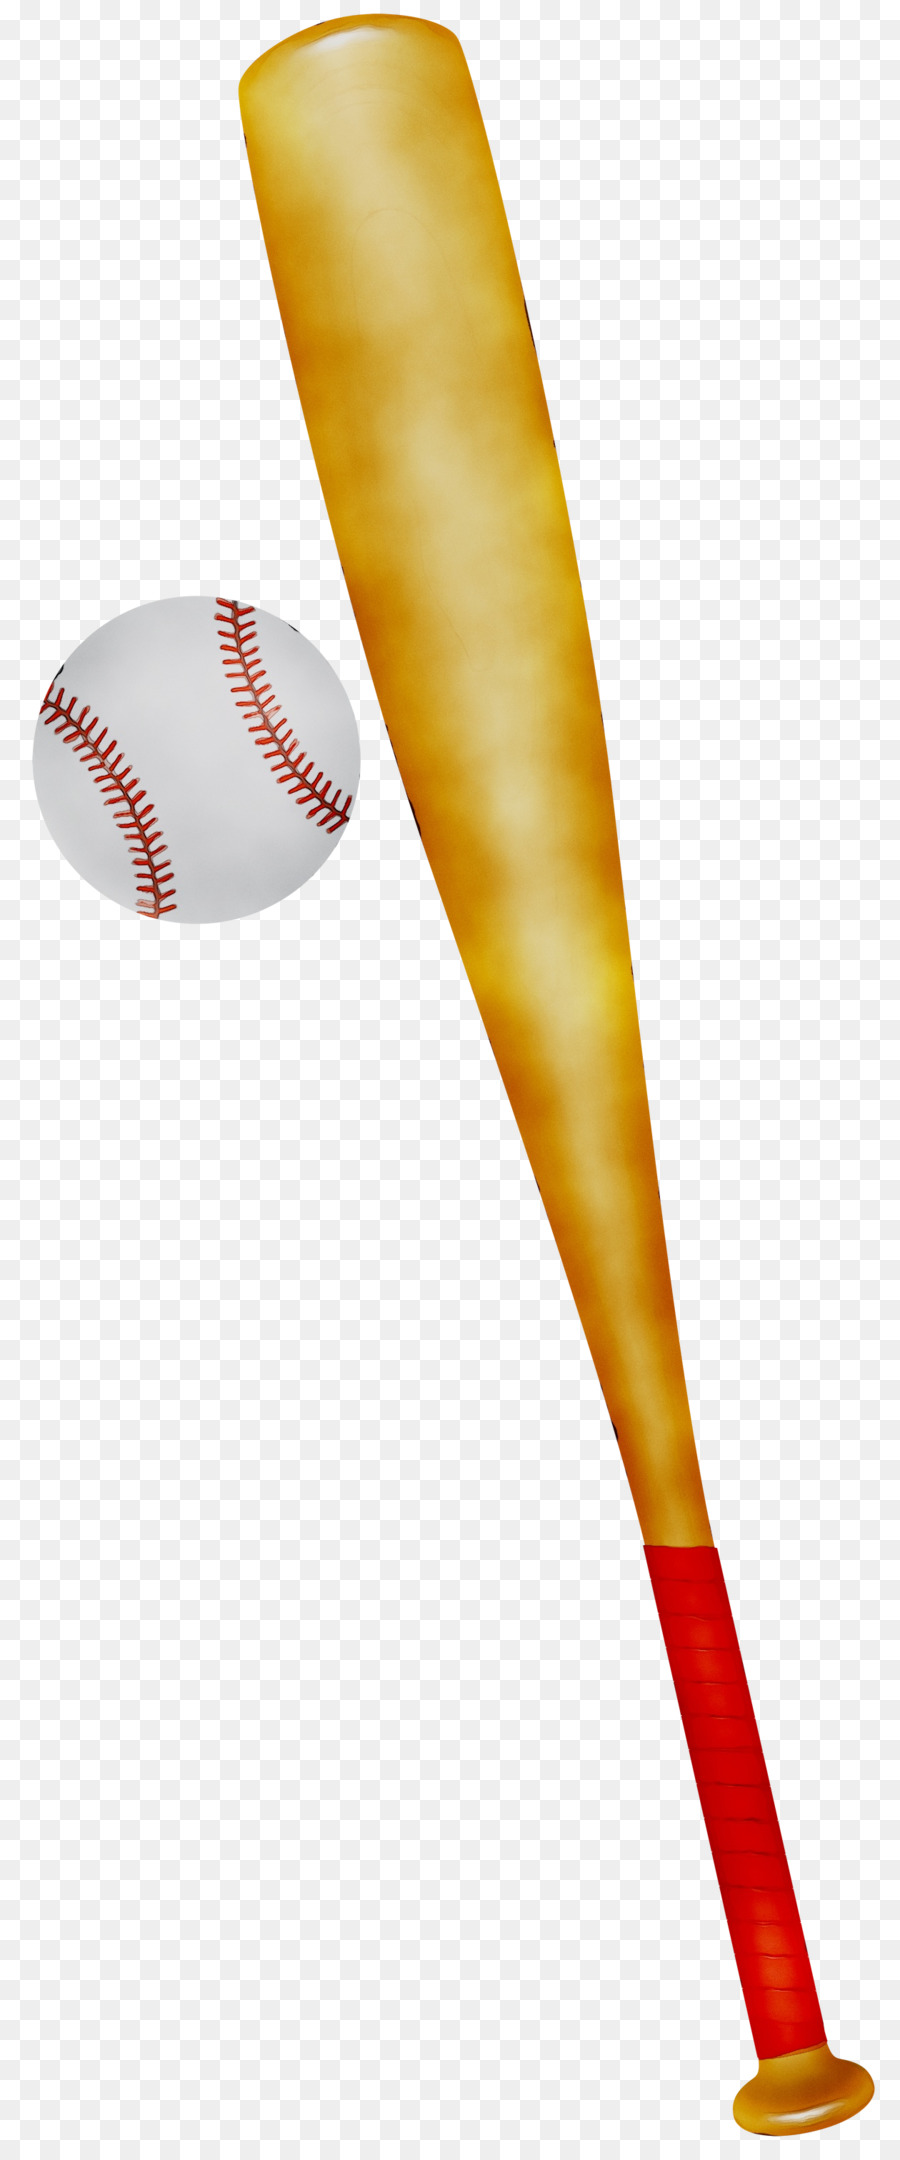 Baseball Bats Product design -  png download - 1260*3000 - Free Transparent Baseball Bats png Download.